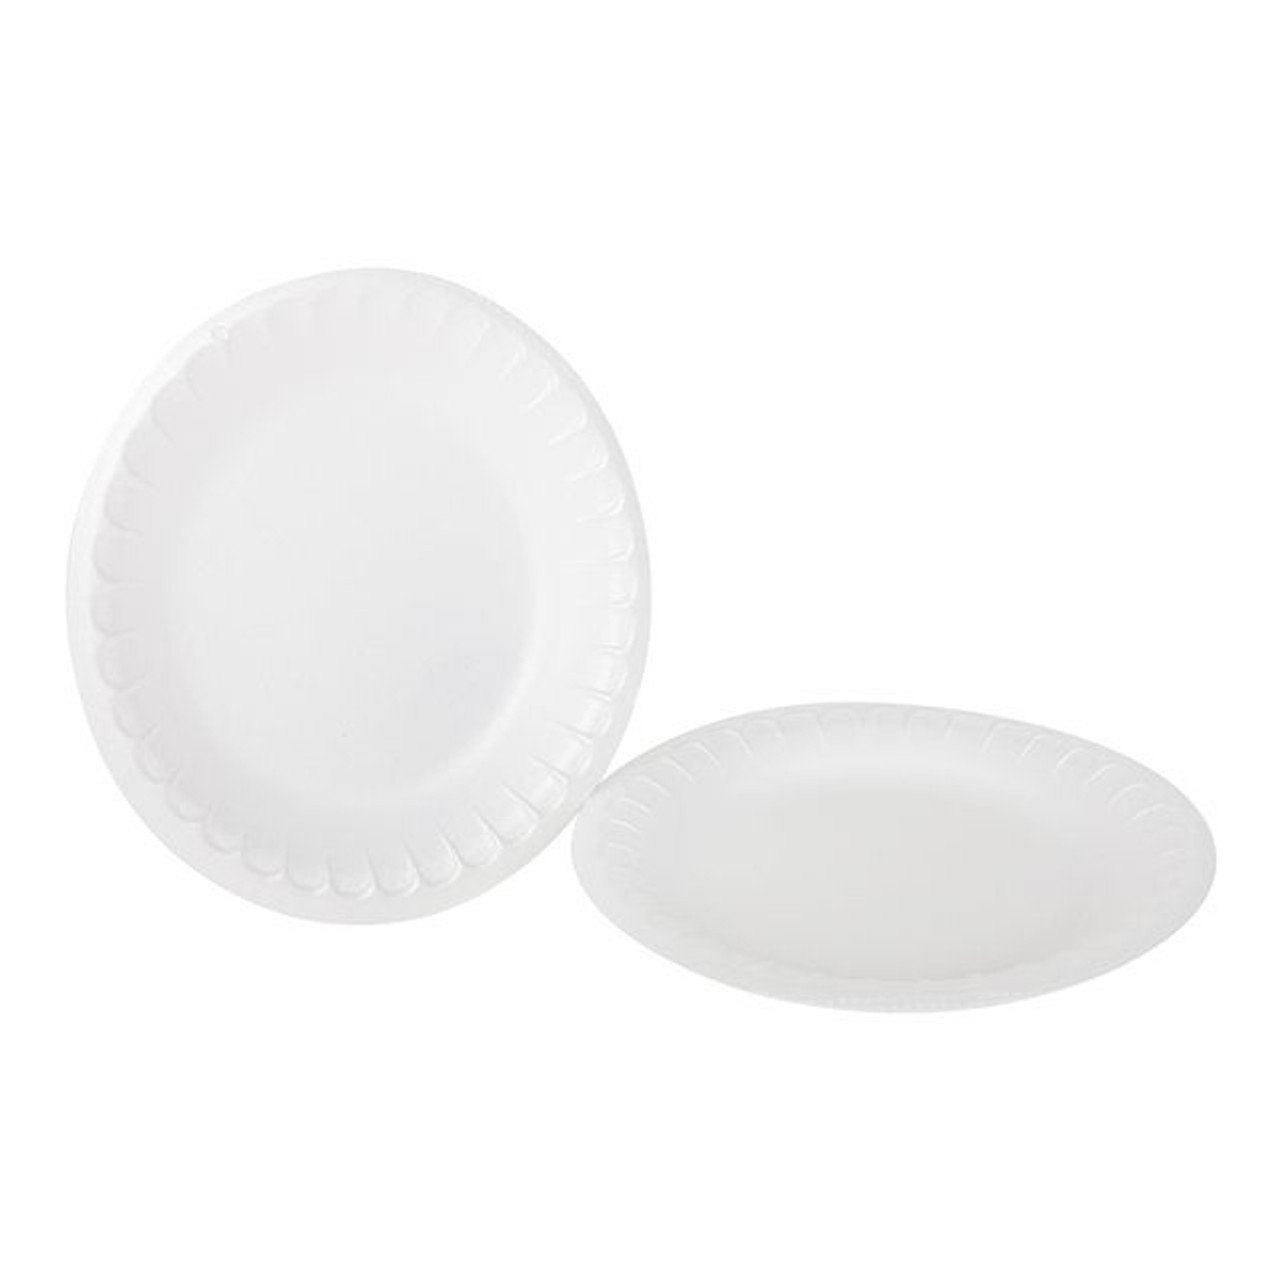 Gordon Choice 6in White Foam Plates, Satin | 1000UN/Unit, 1 Unit/Case